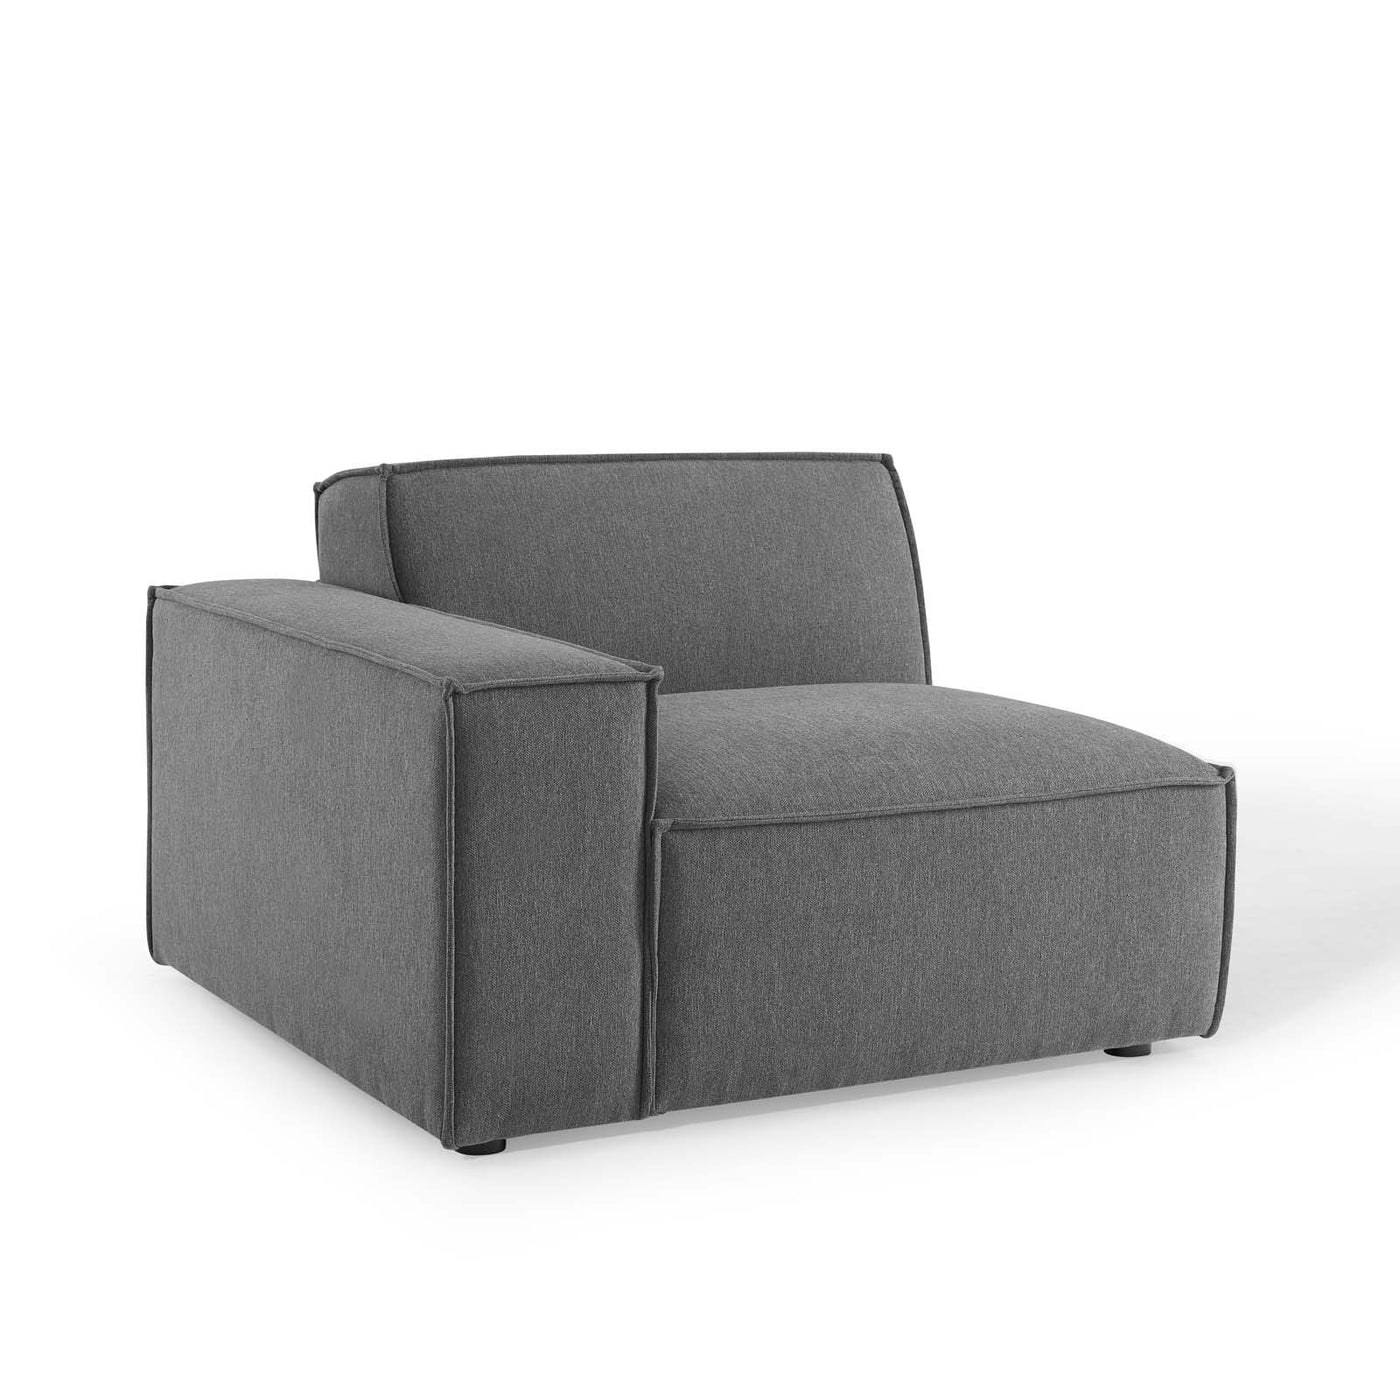 Restore 4-Piece Sectional Sofa